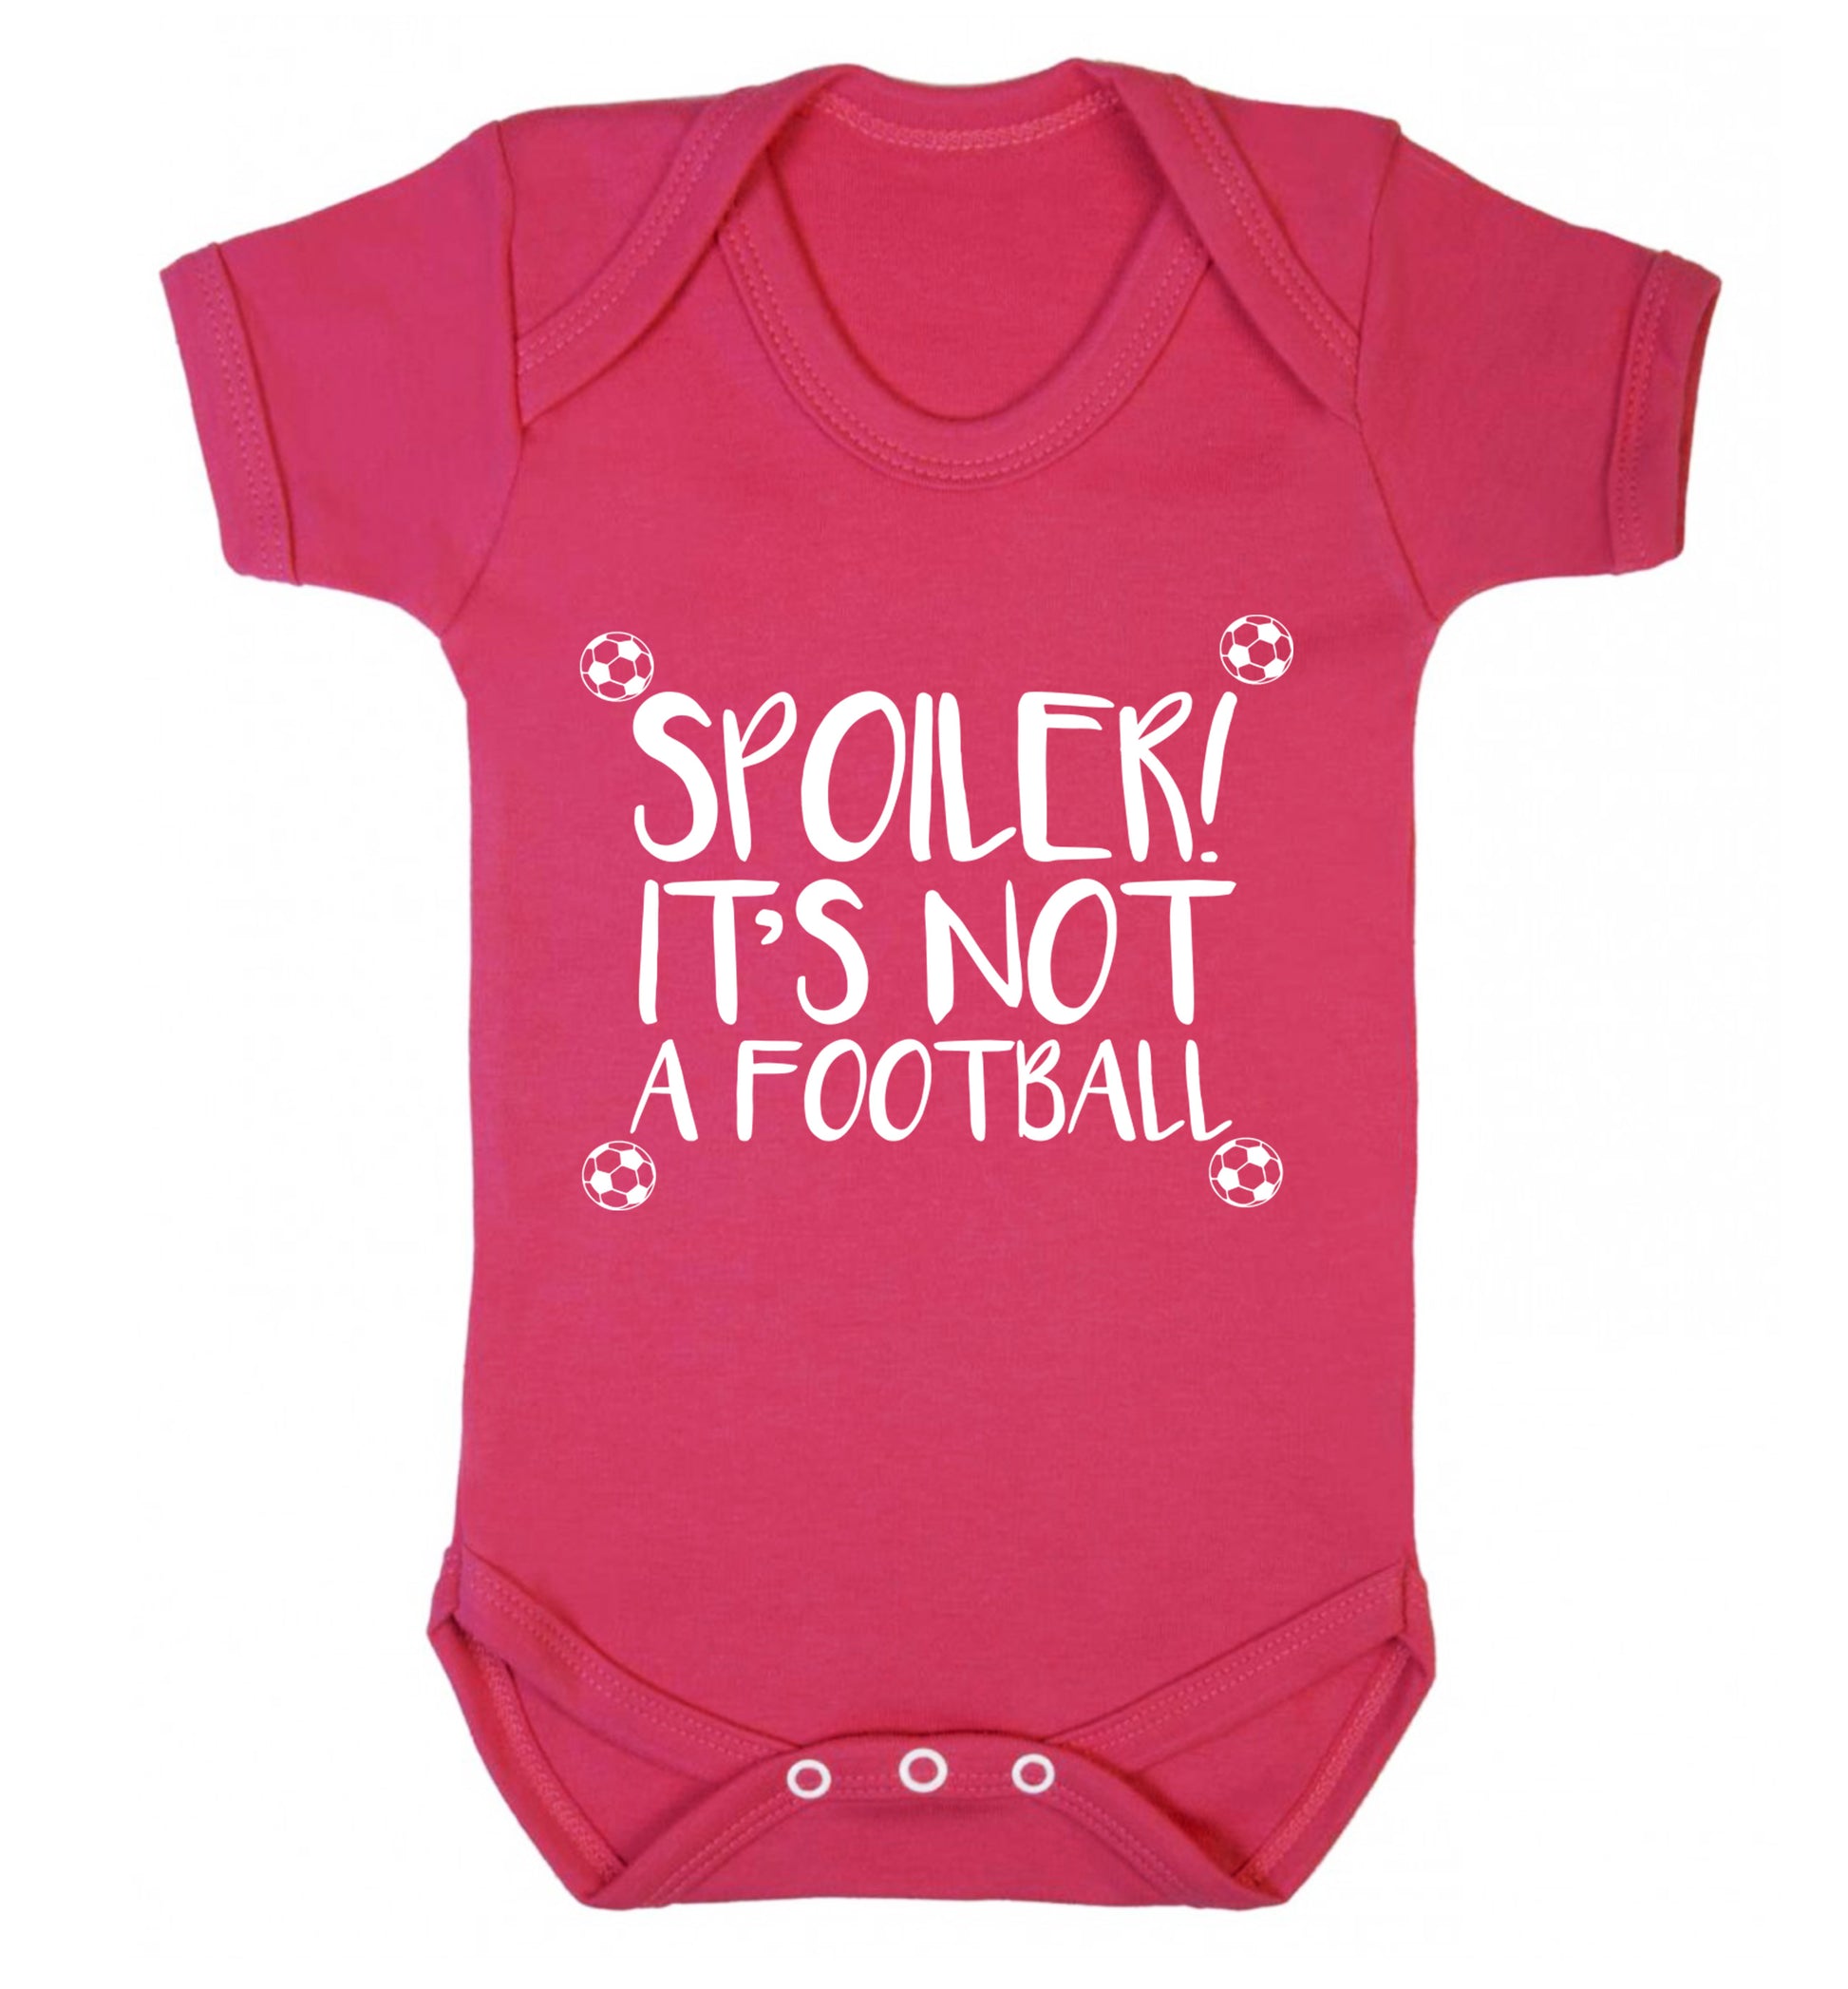 Spoiler it's not a football Baby Vest dark pink 18-24 months